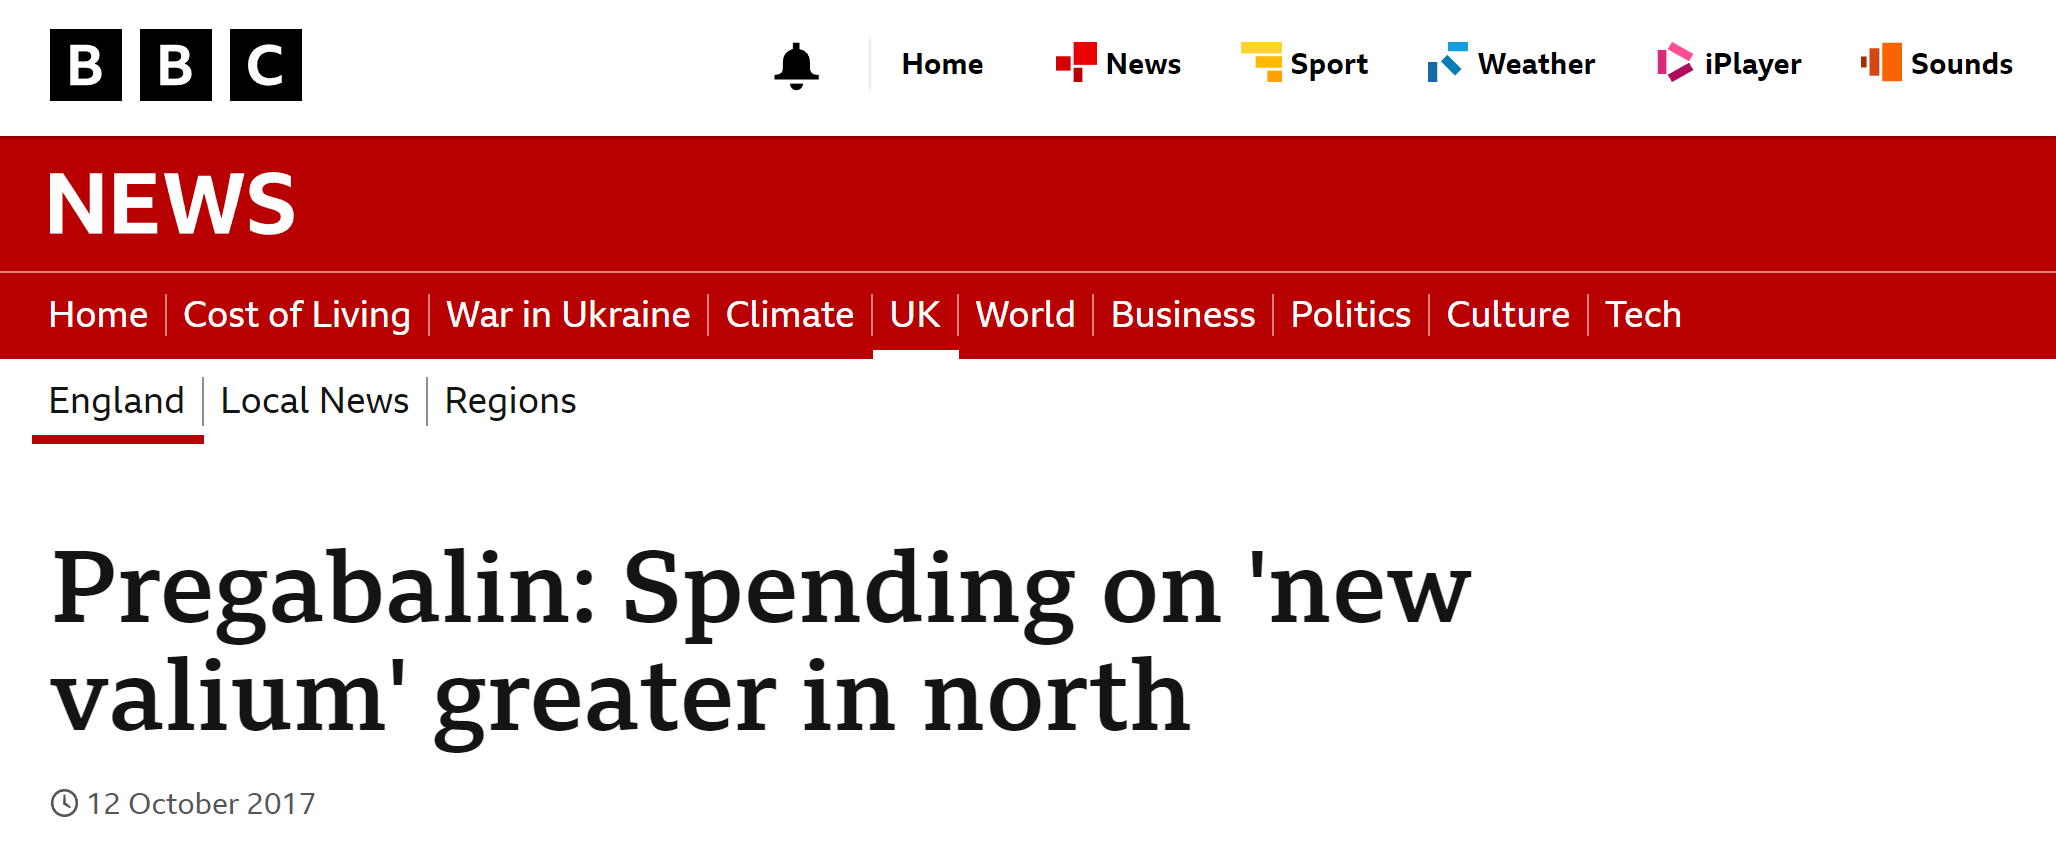 BBC News headline: “Pregabalin: spending on ’new valium’ greater in North”